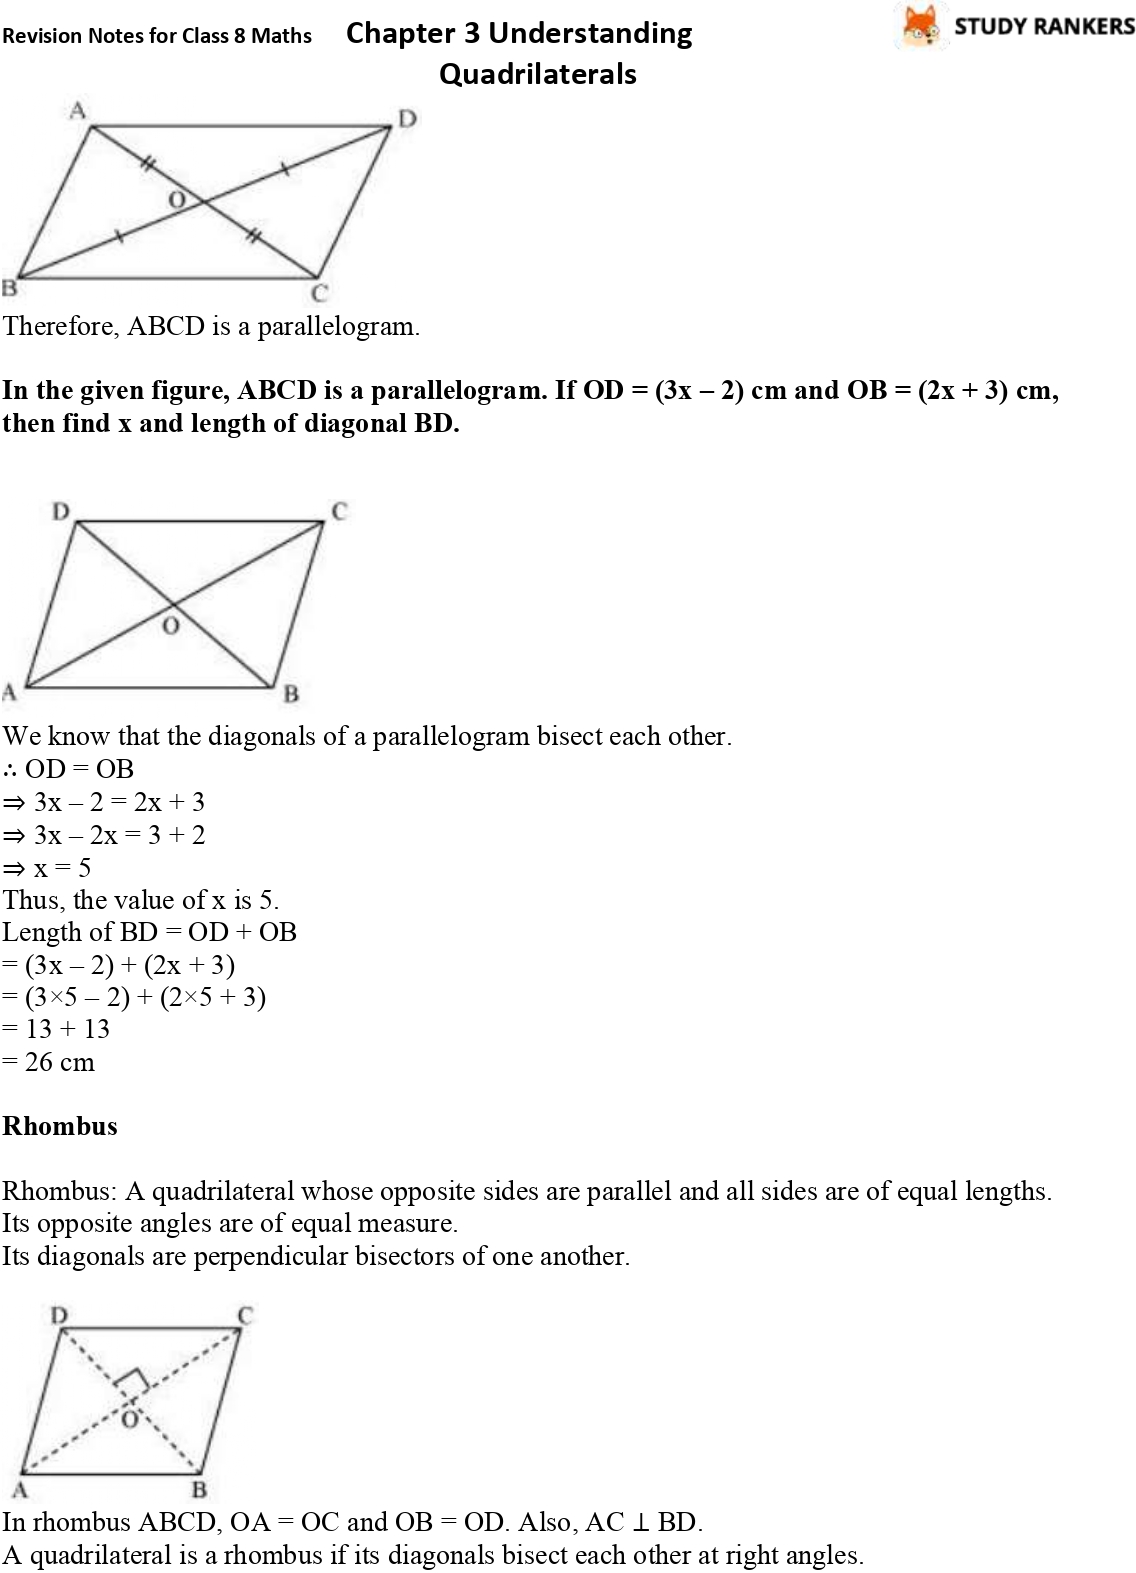 case study on quadrilaterals class 8